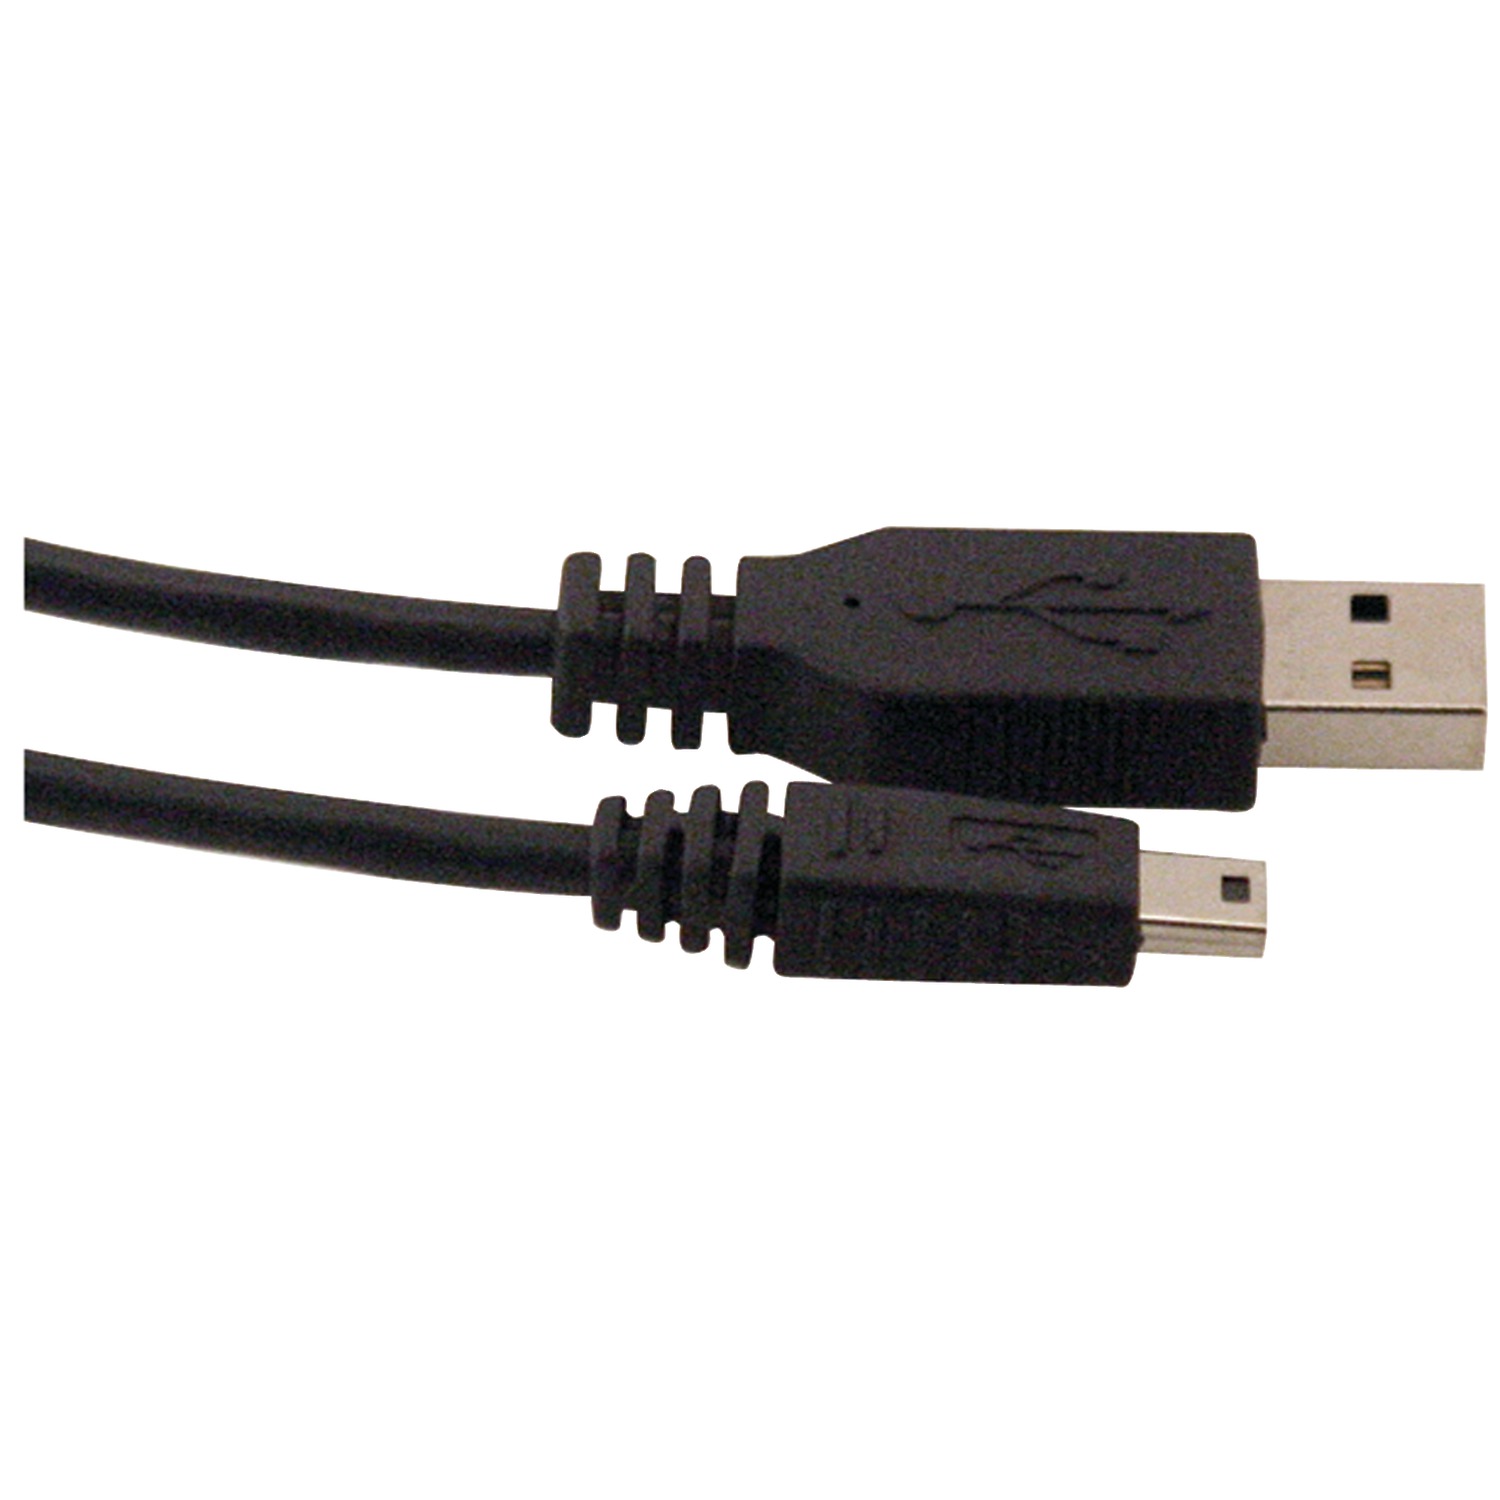 Garmin 010-10723-01 USB to Mini USB Data Cable - image 1 of 5